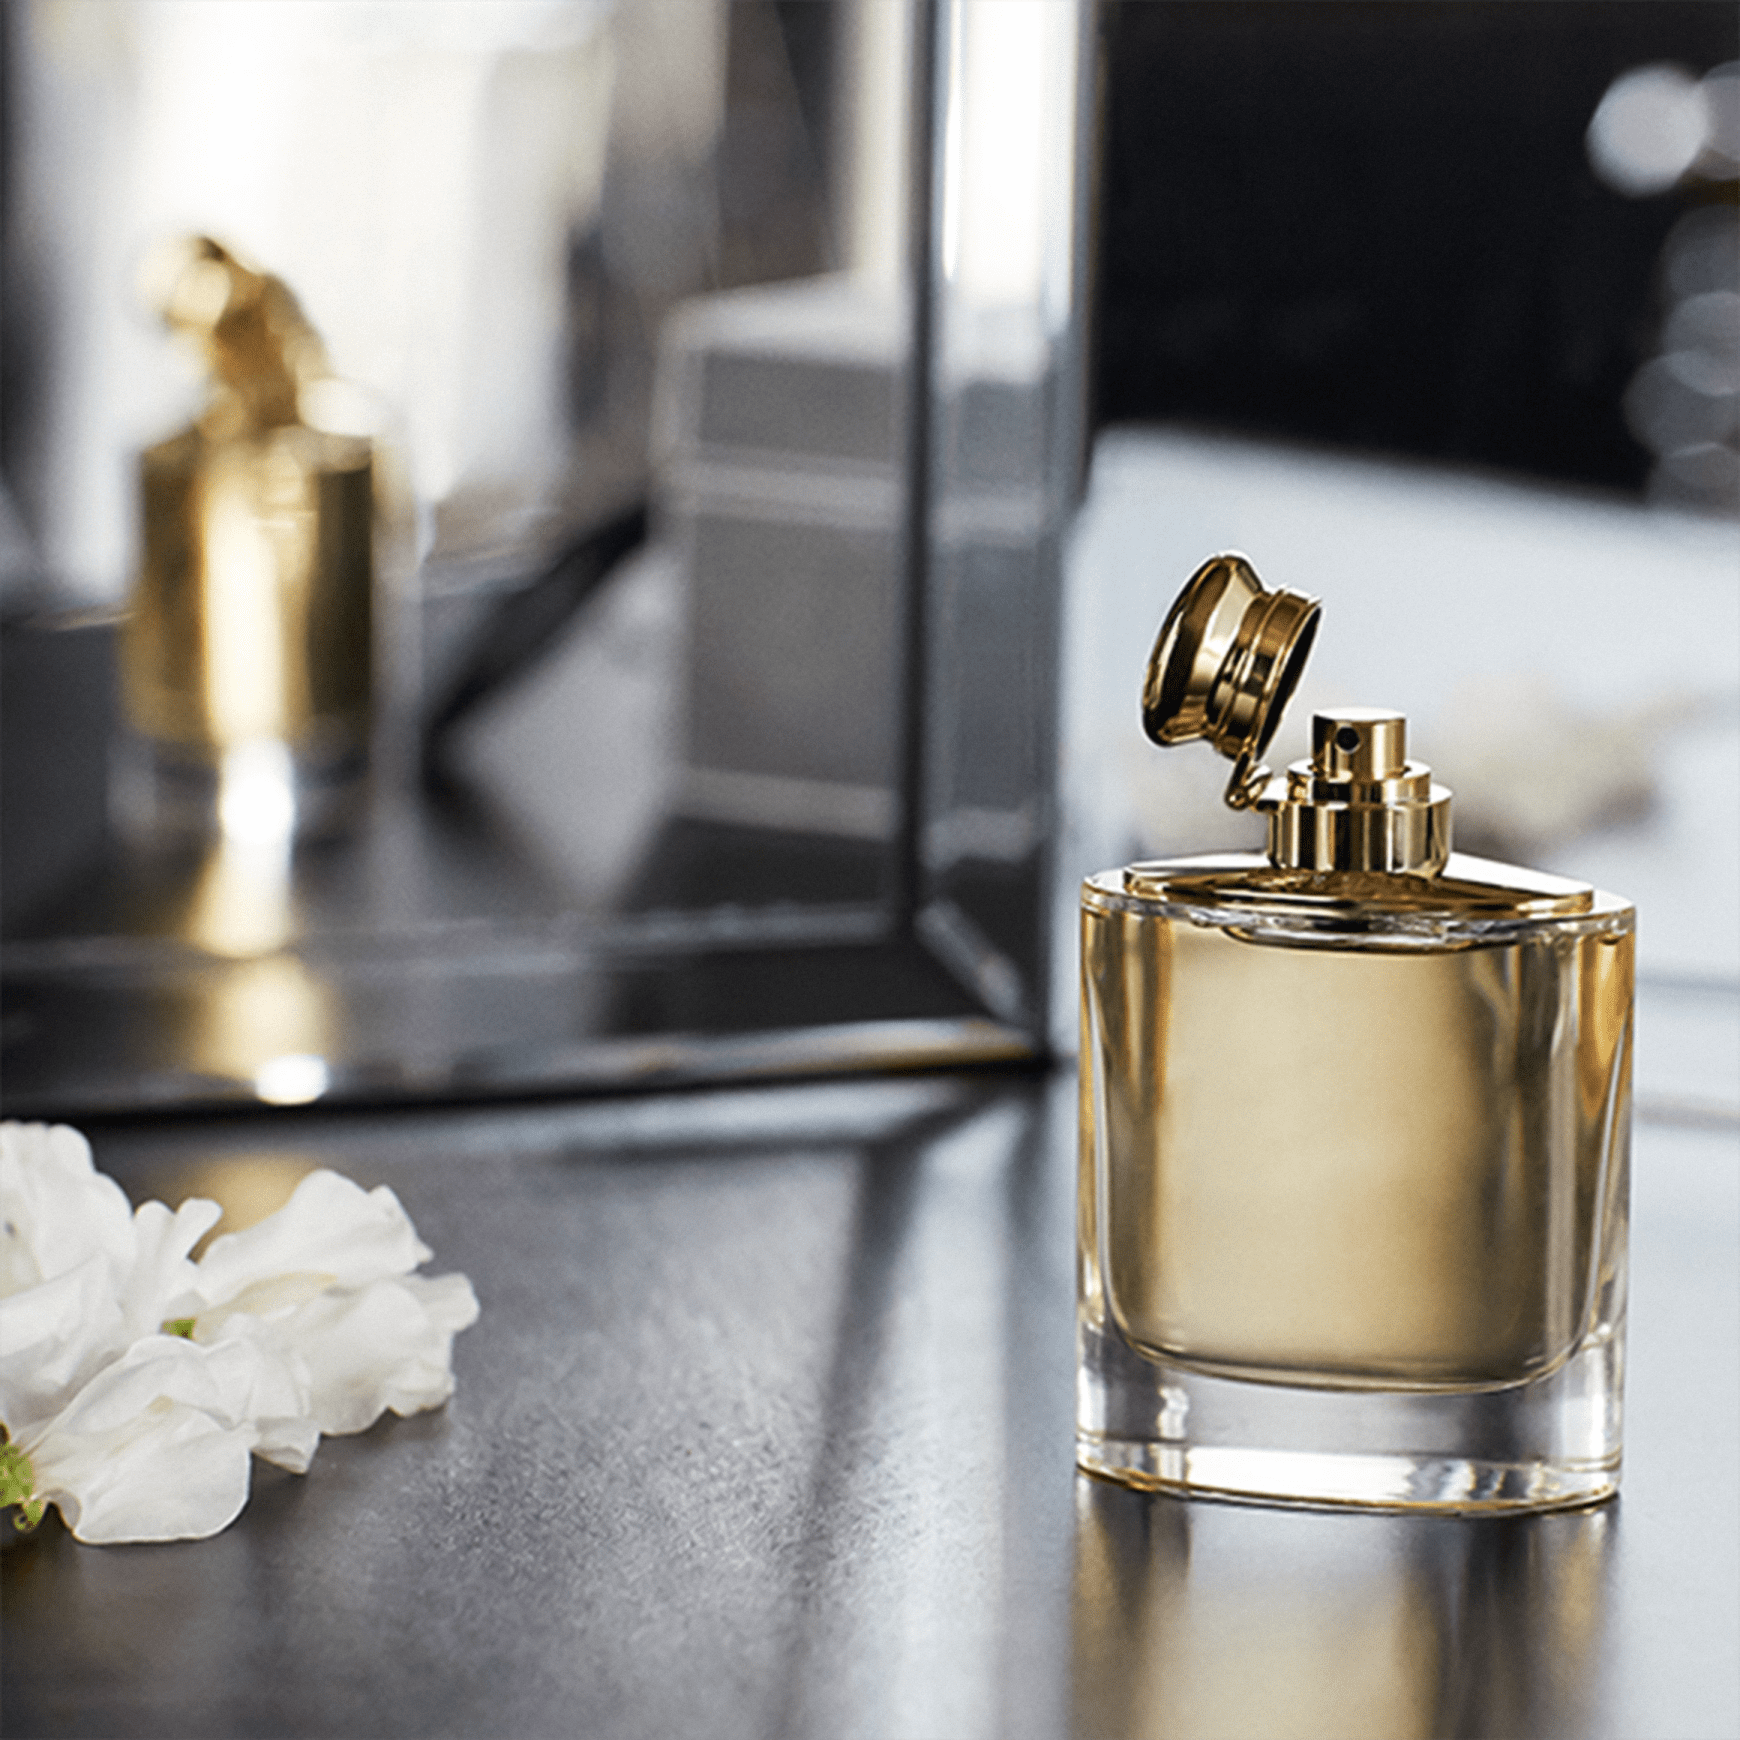 Perfume Woman by Ralph Lauren EDP 30ml Ralph Lauren - Condessa Cosméticos e  Perfumaria